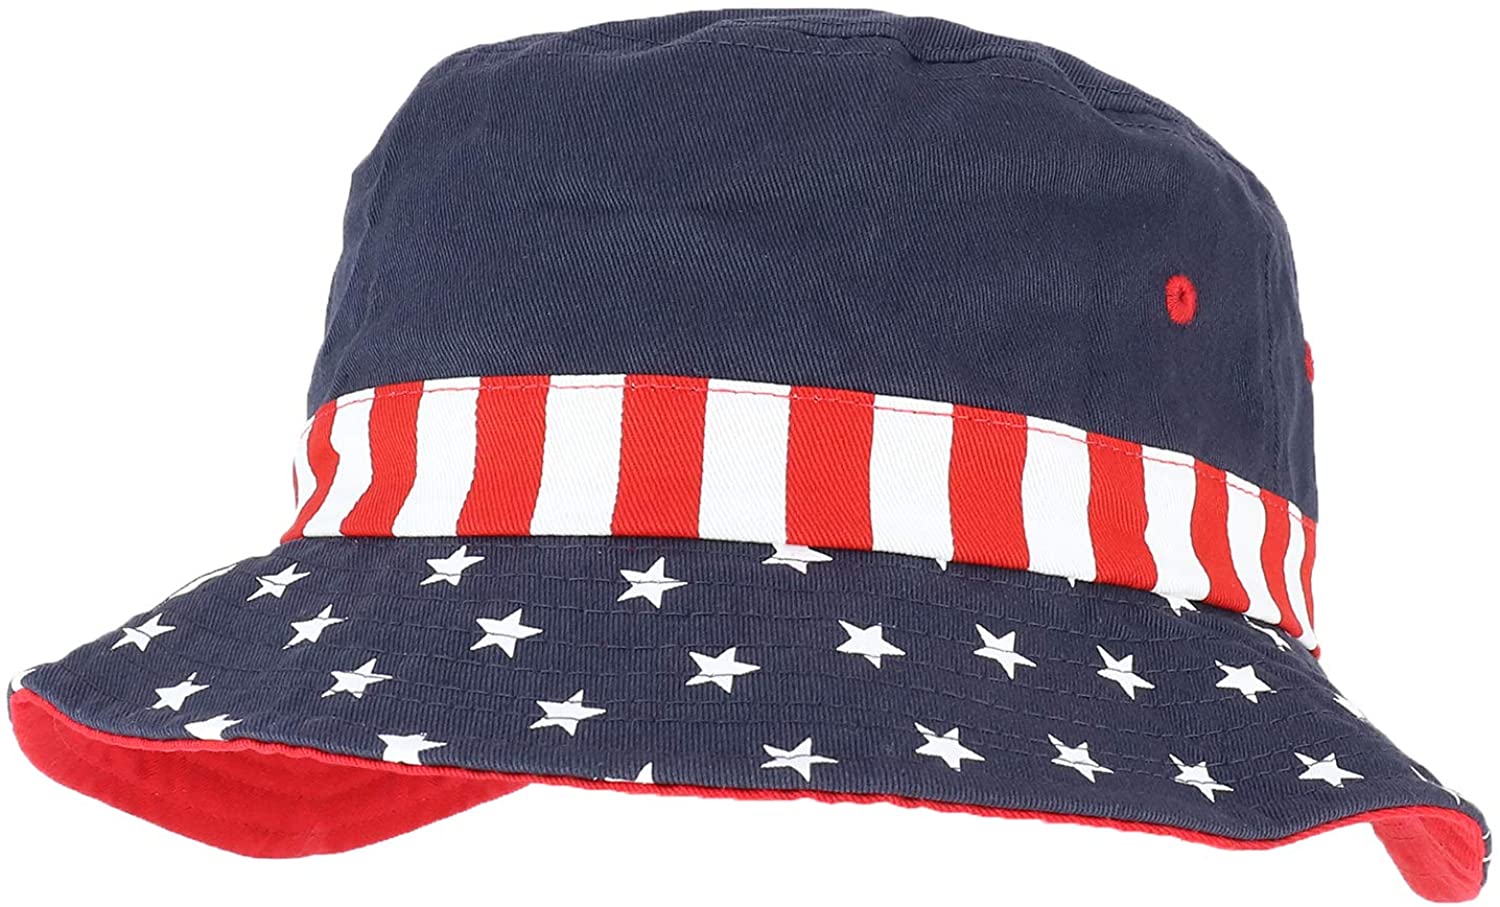 Armycrew USA Flag Designed Cotton Bucket Hat